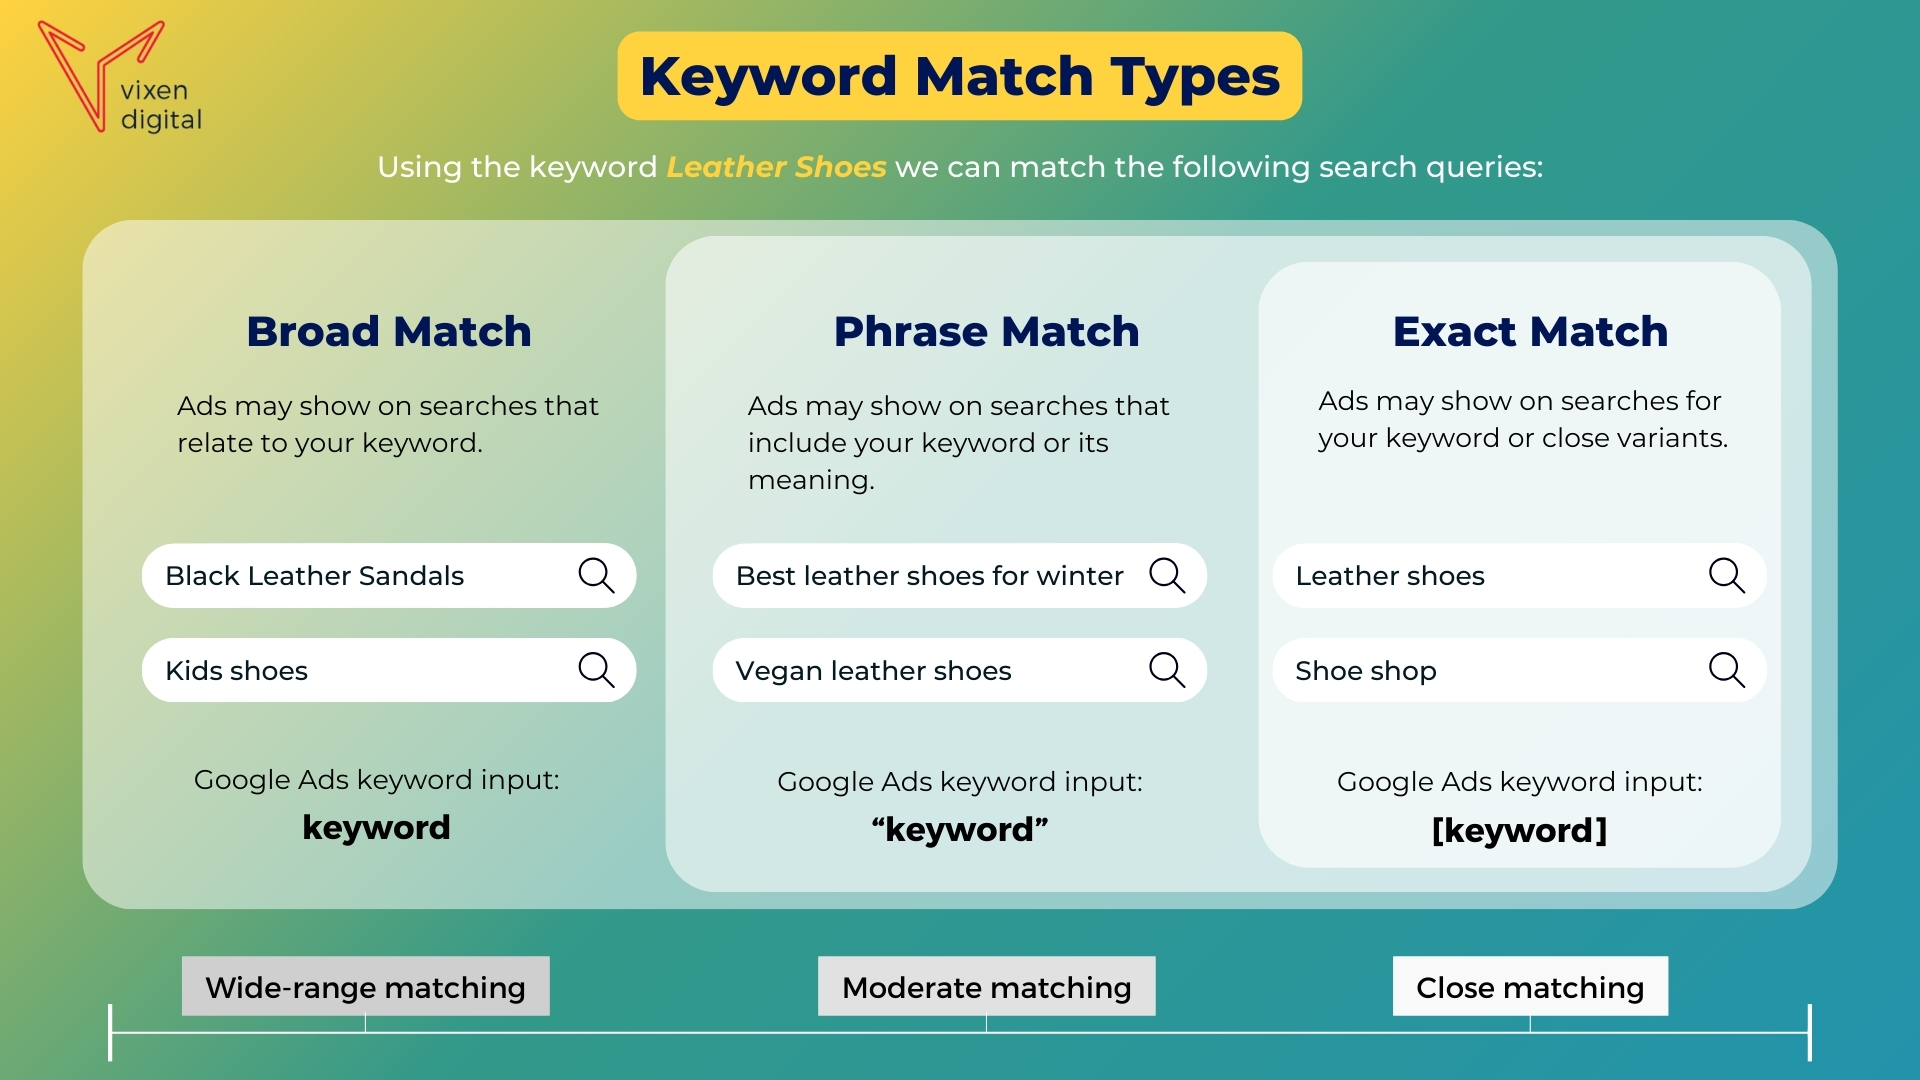 Keyword Match Types Infographic